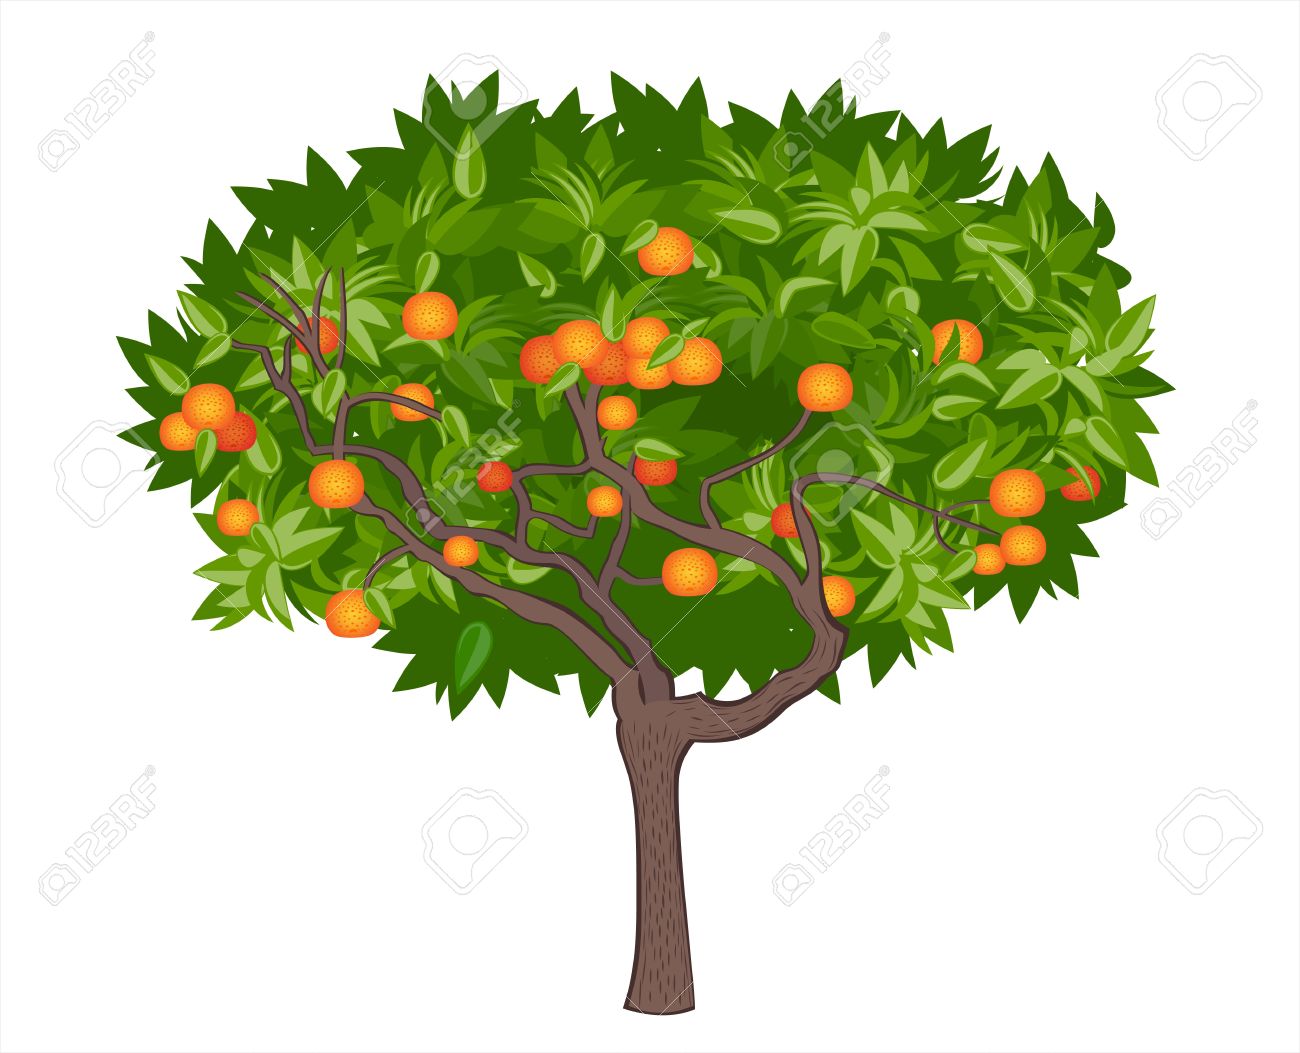 Mandarin tree clipart - Clipground